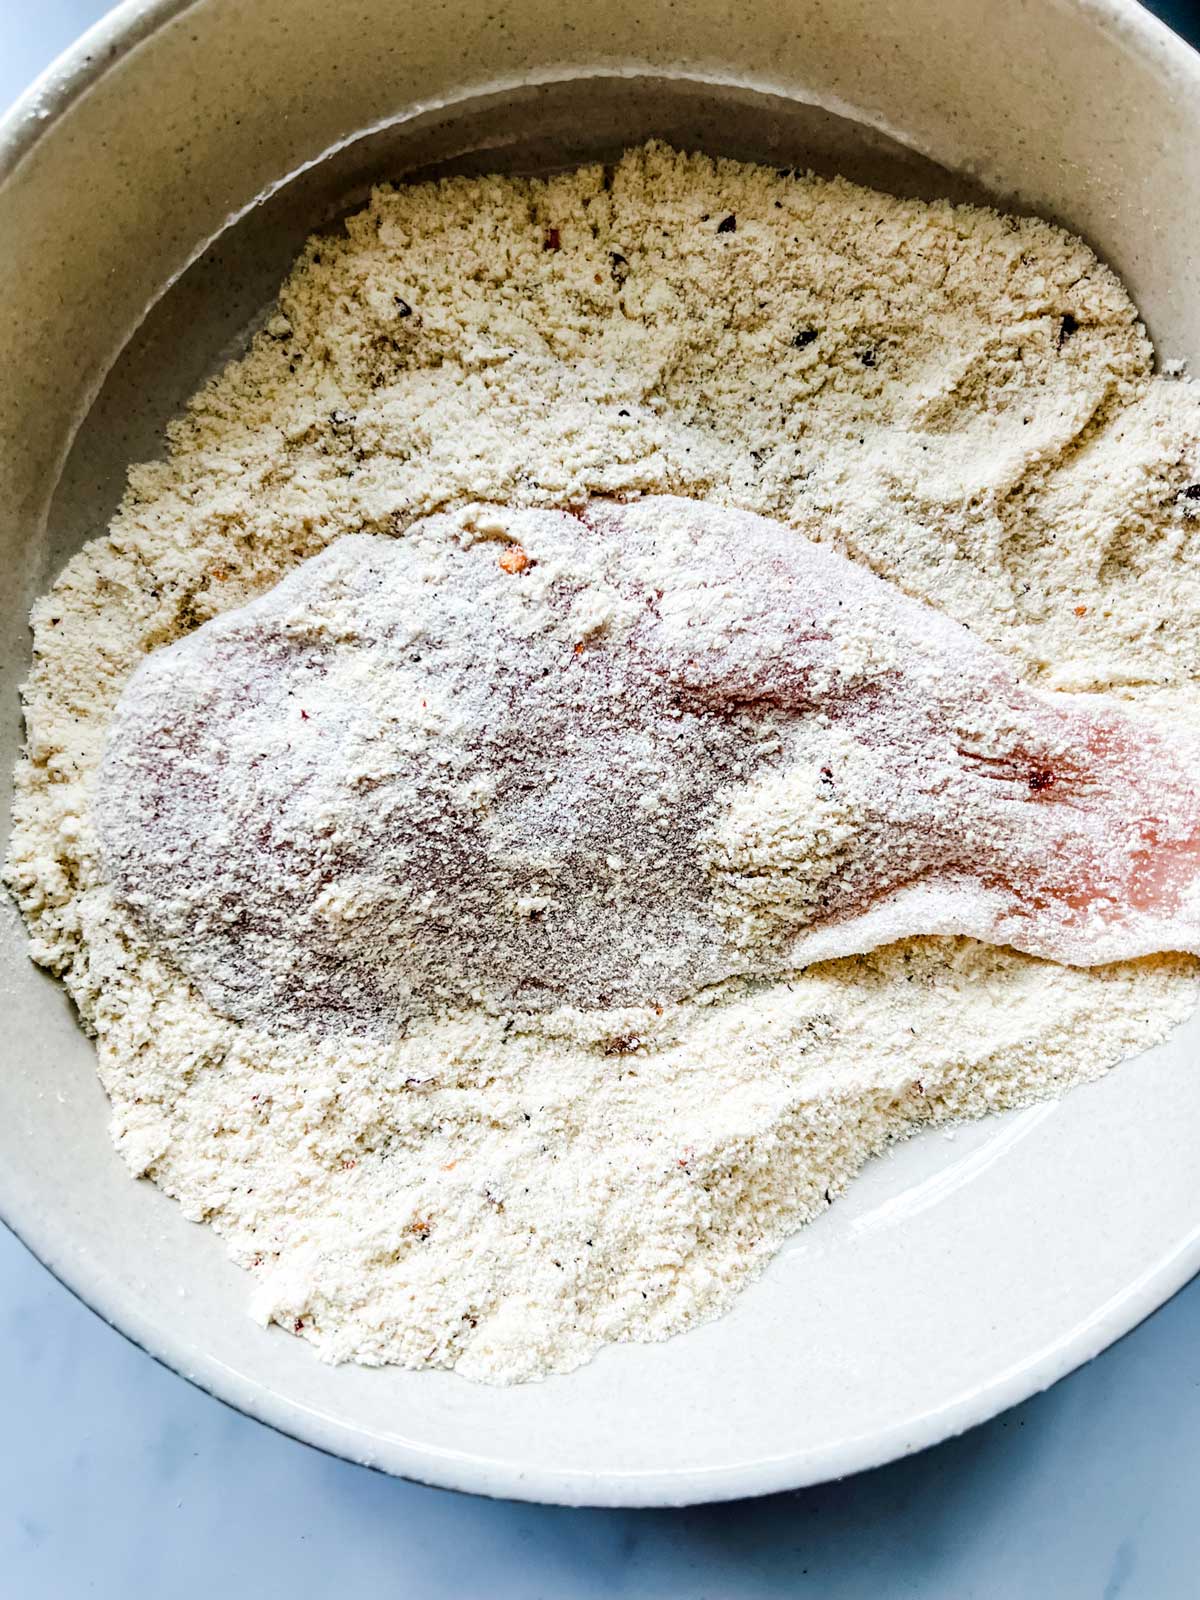 Chicken breast in a bowl of seasoned coconut flour.